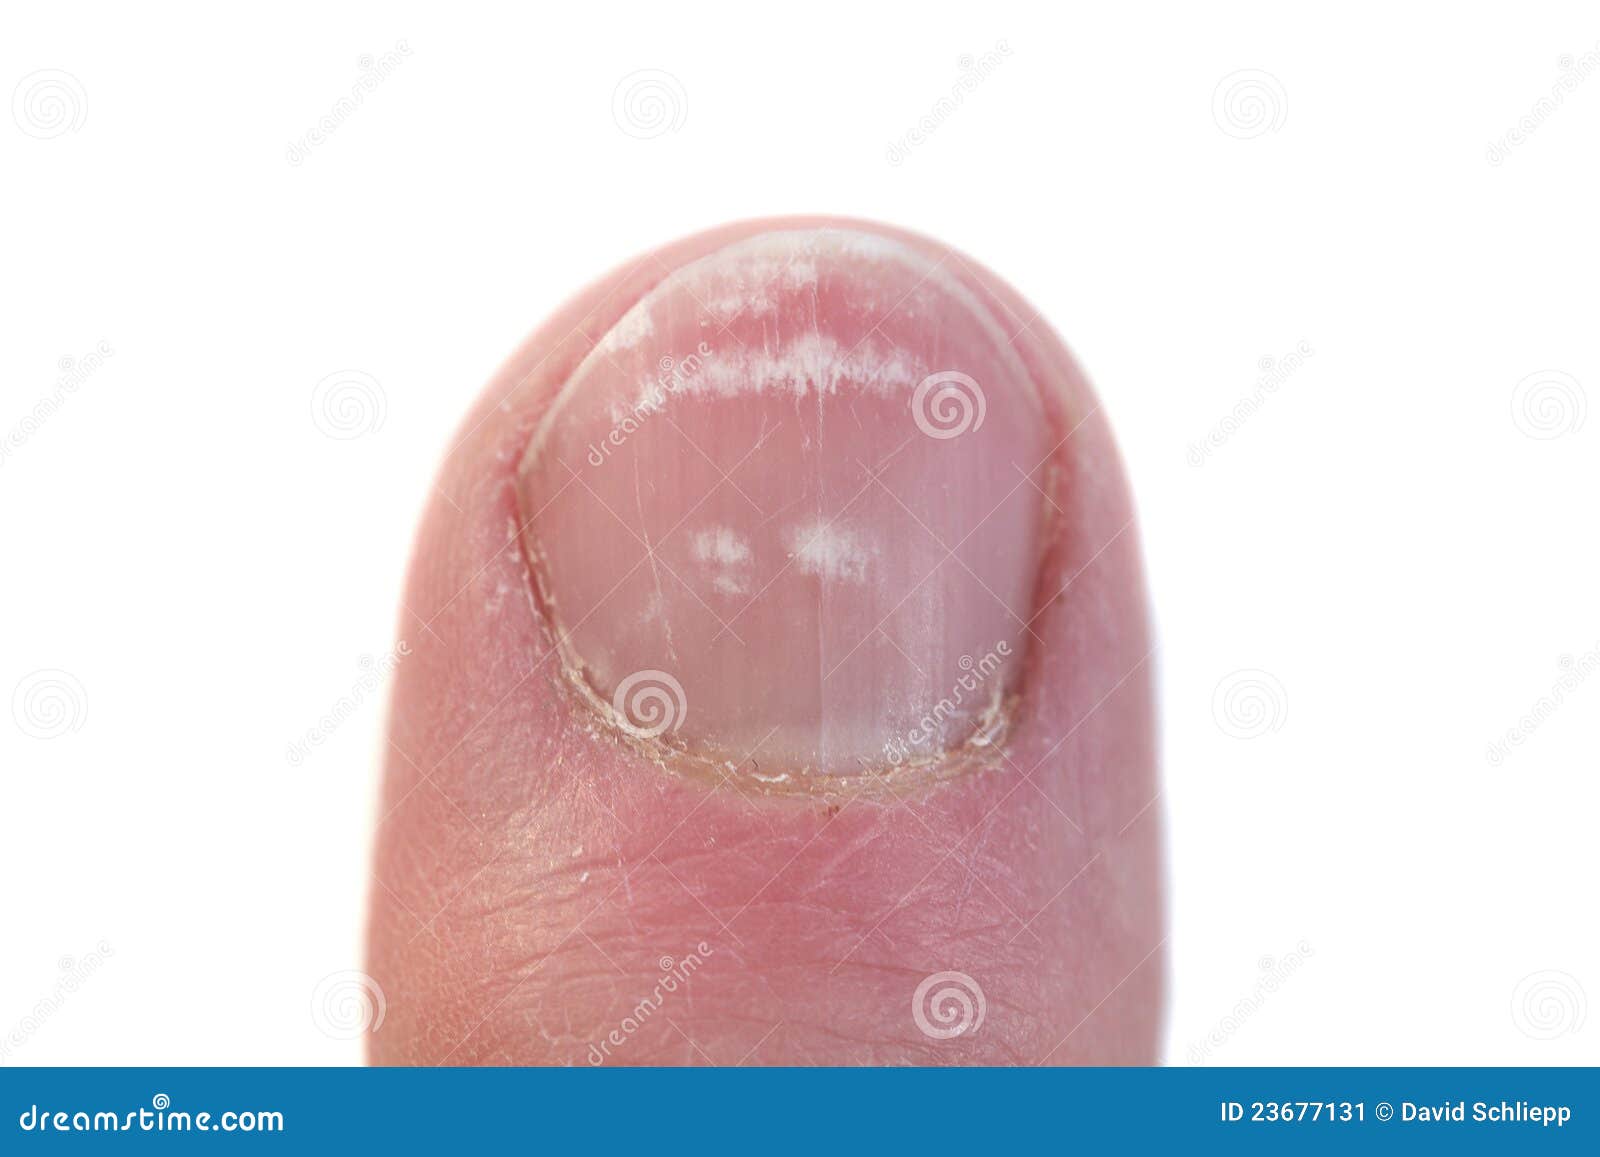 closeup of a fingernail with leukonychia